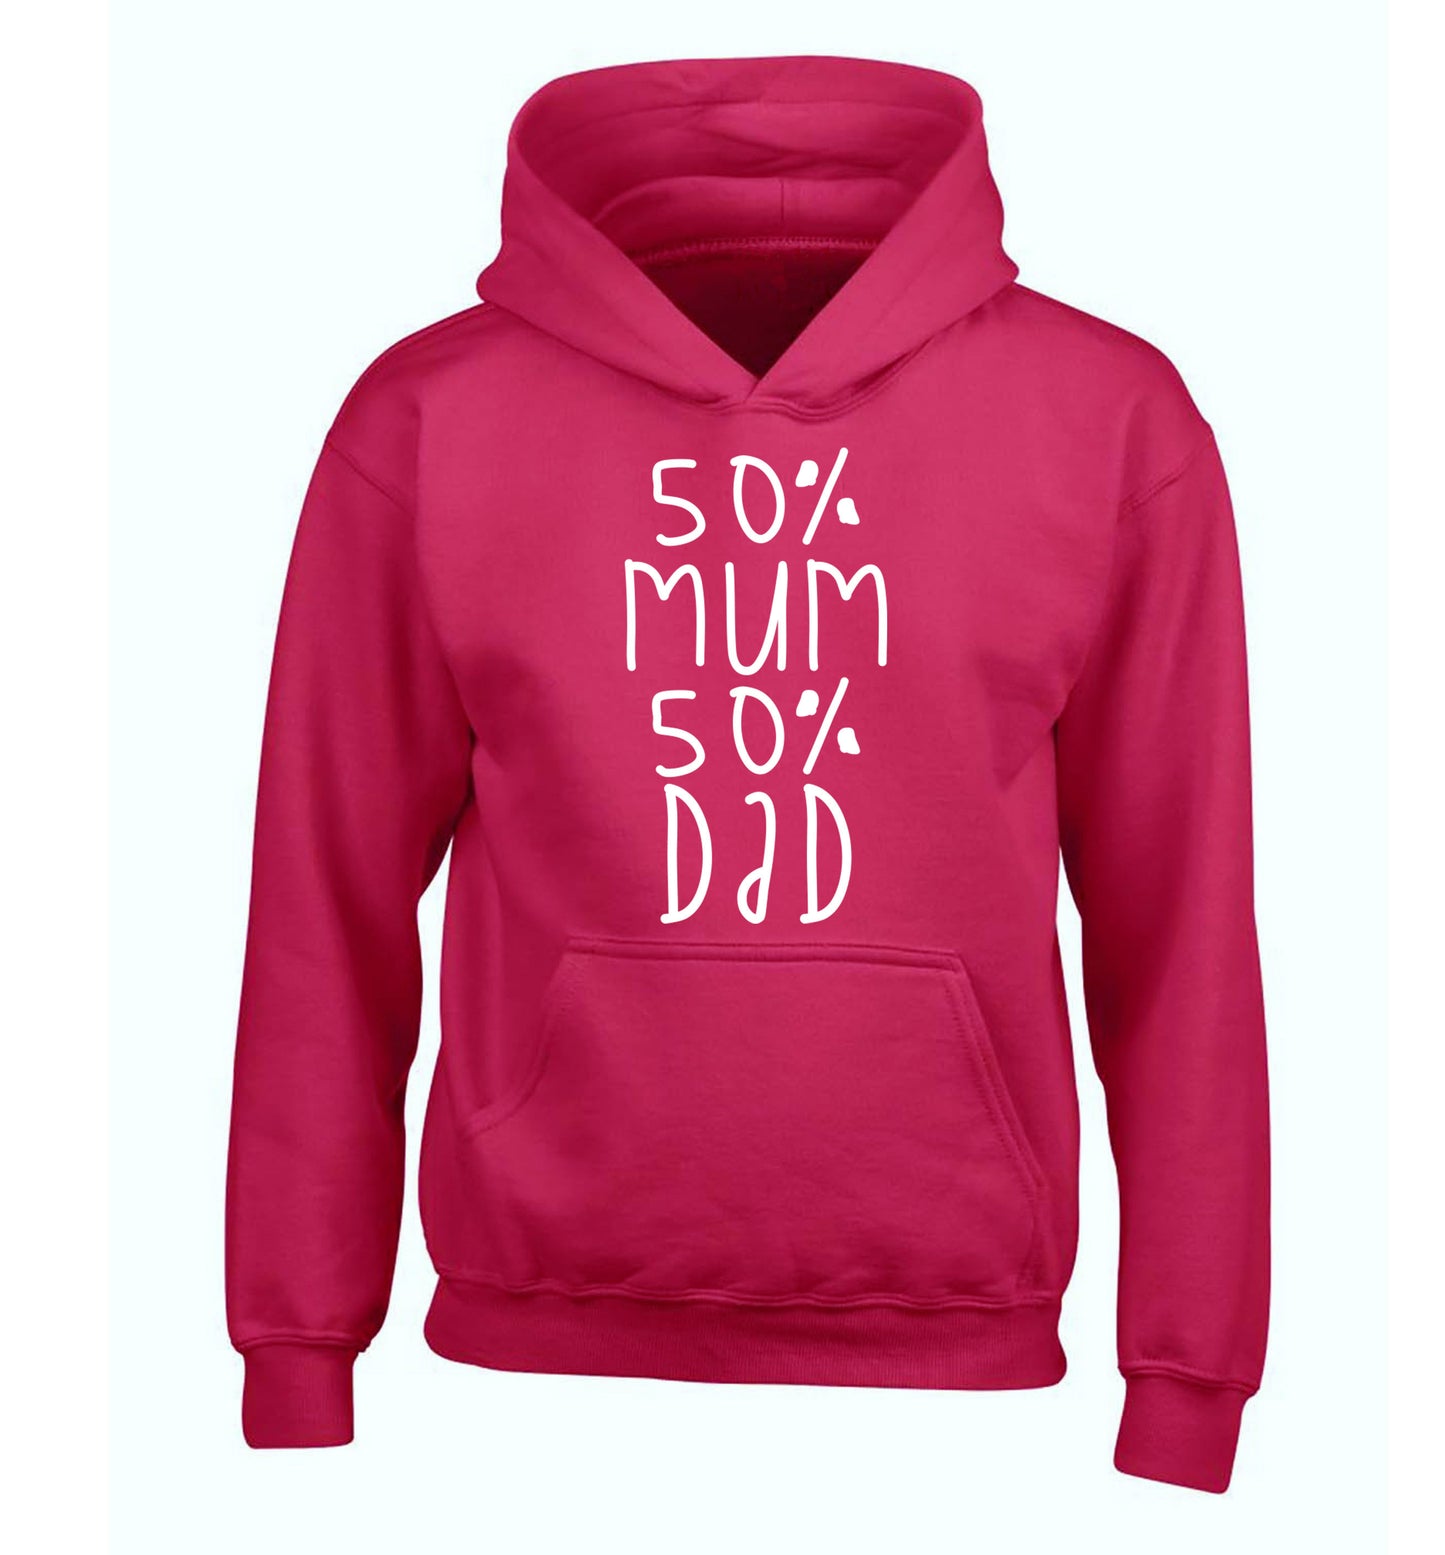 50% mum 50% dad children's pink hoodie 12-14 Years